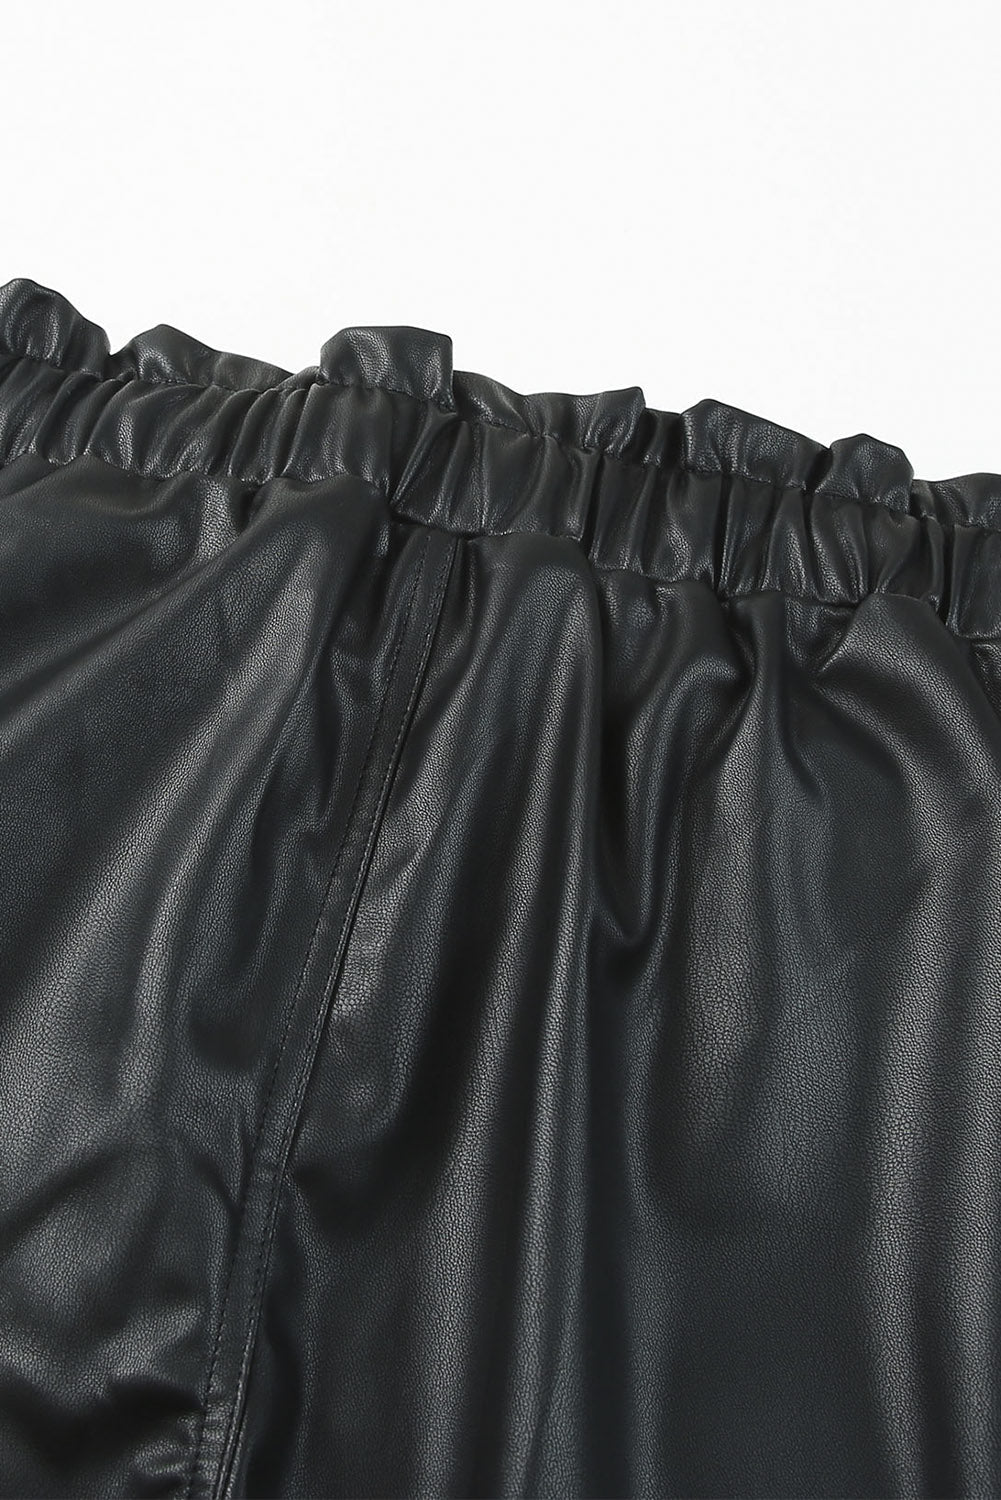 Black PU Leather Drawstring Elastic Waist Joggers